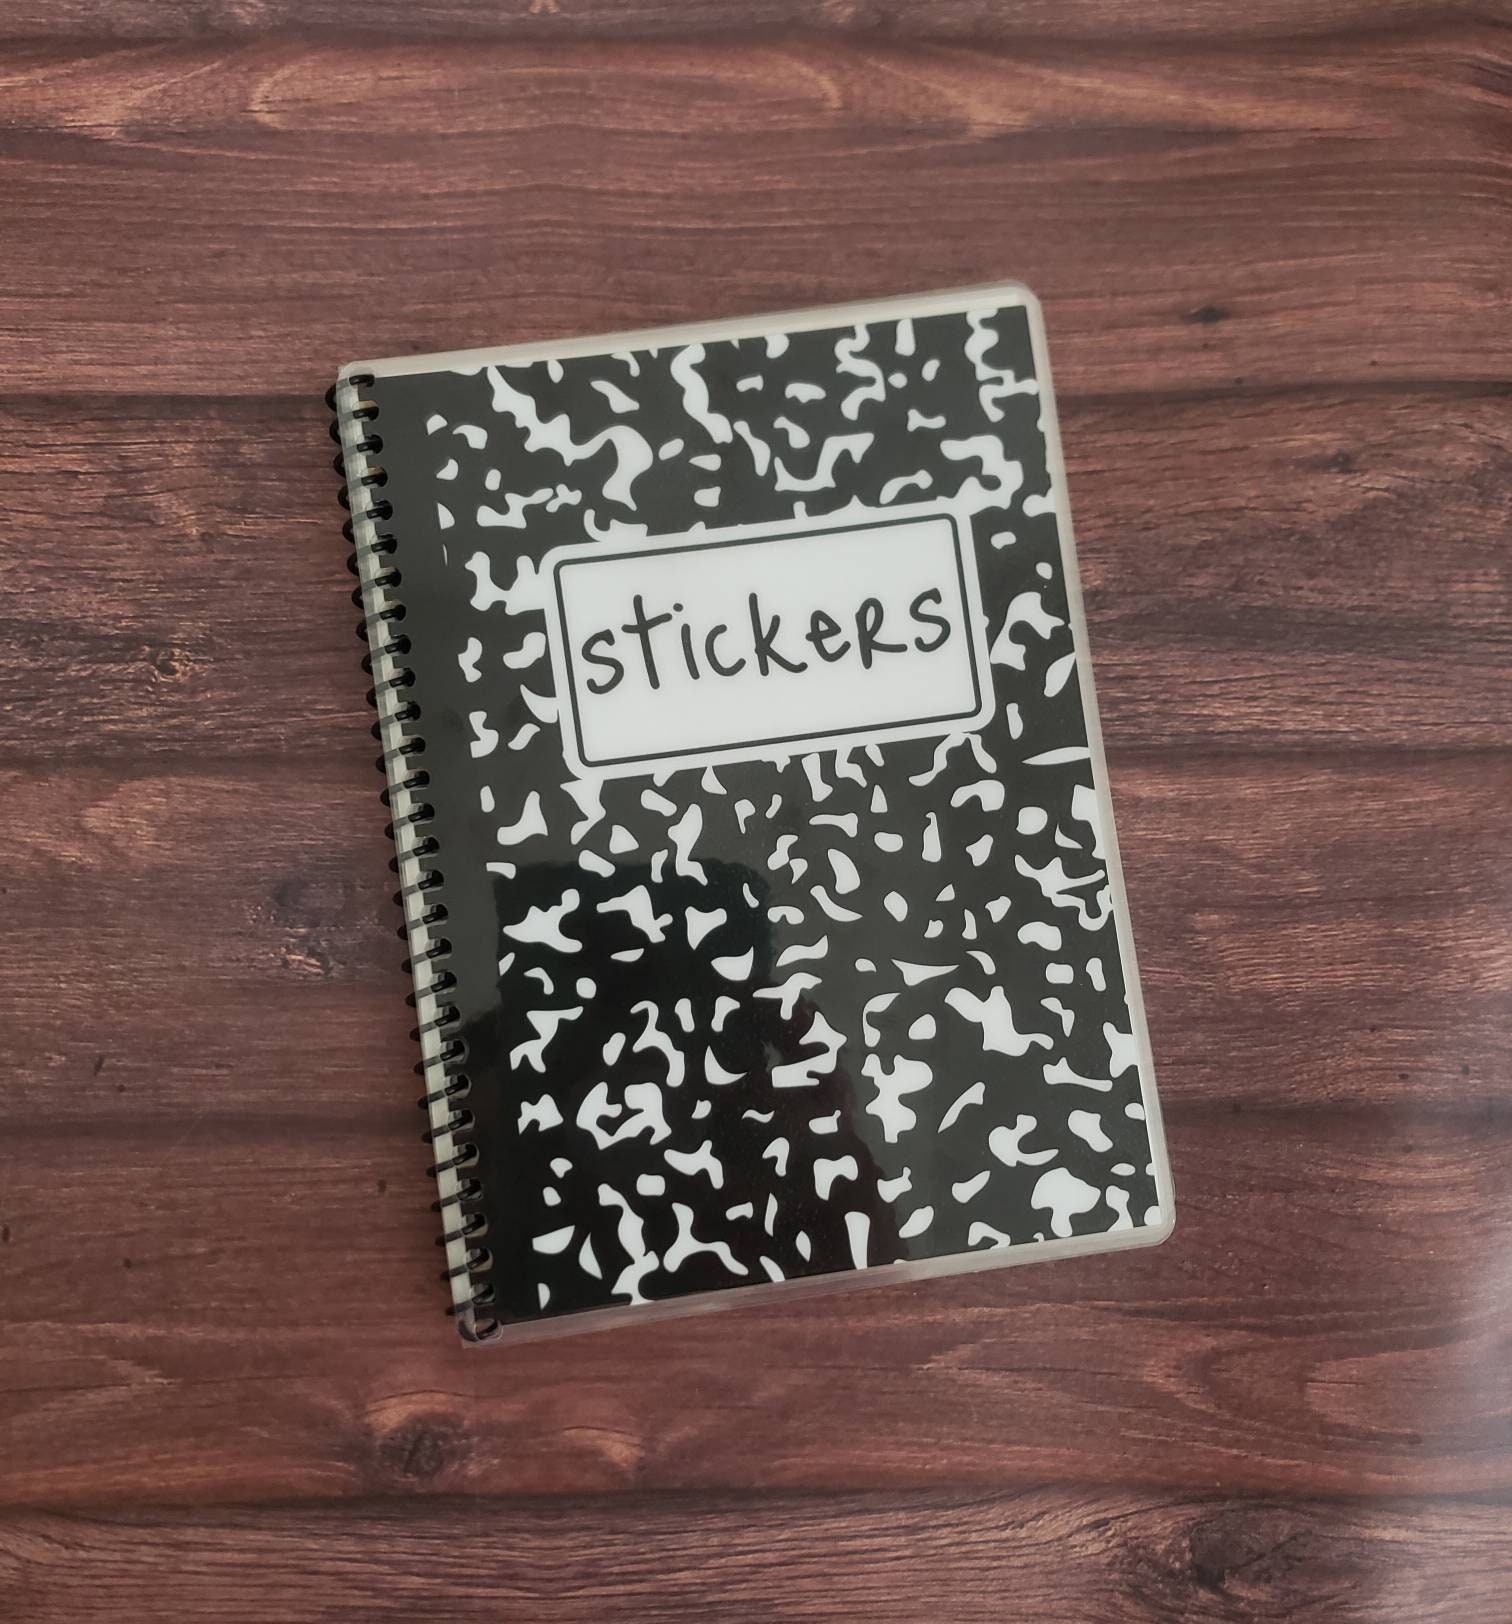 My Sticker Book: Blank Sticker Collection Book for Kids Unicorn